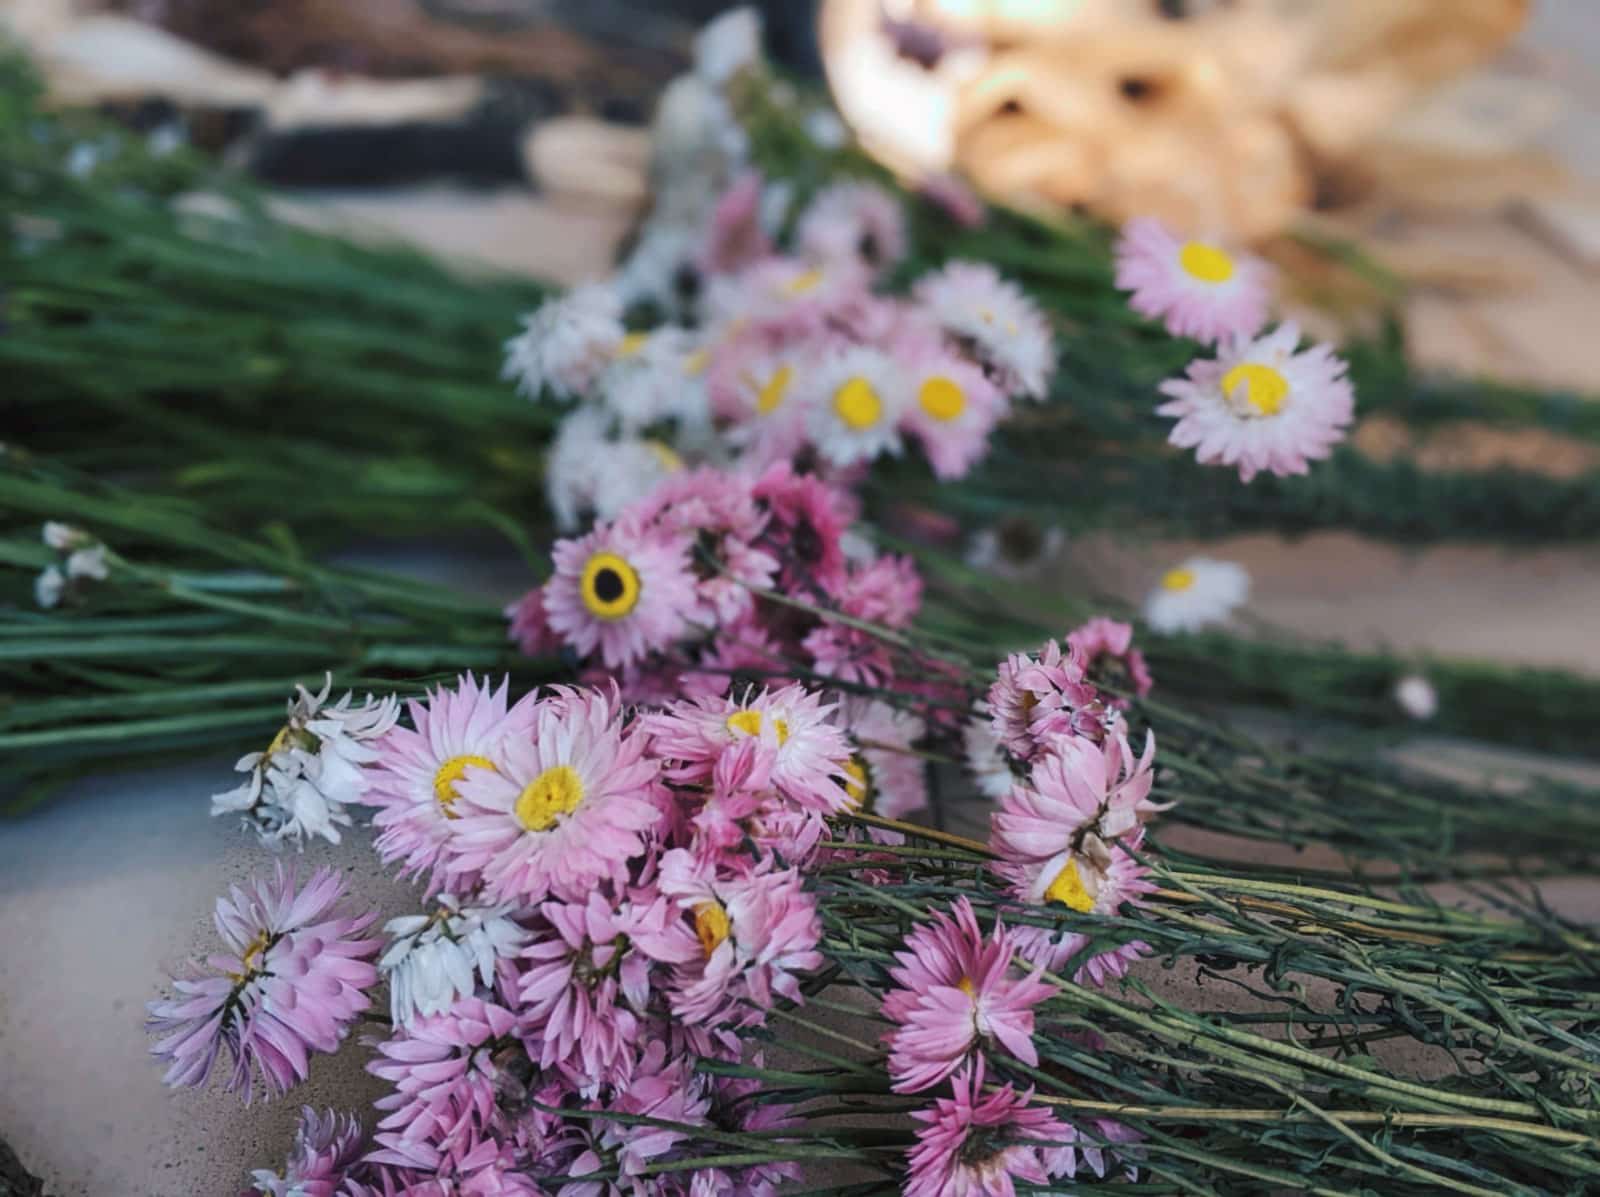 Dried flowers